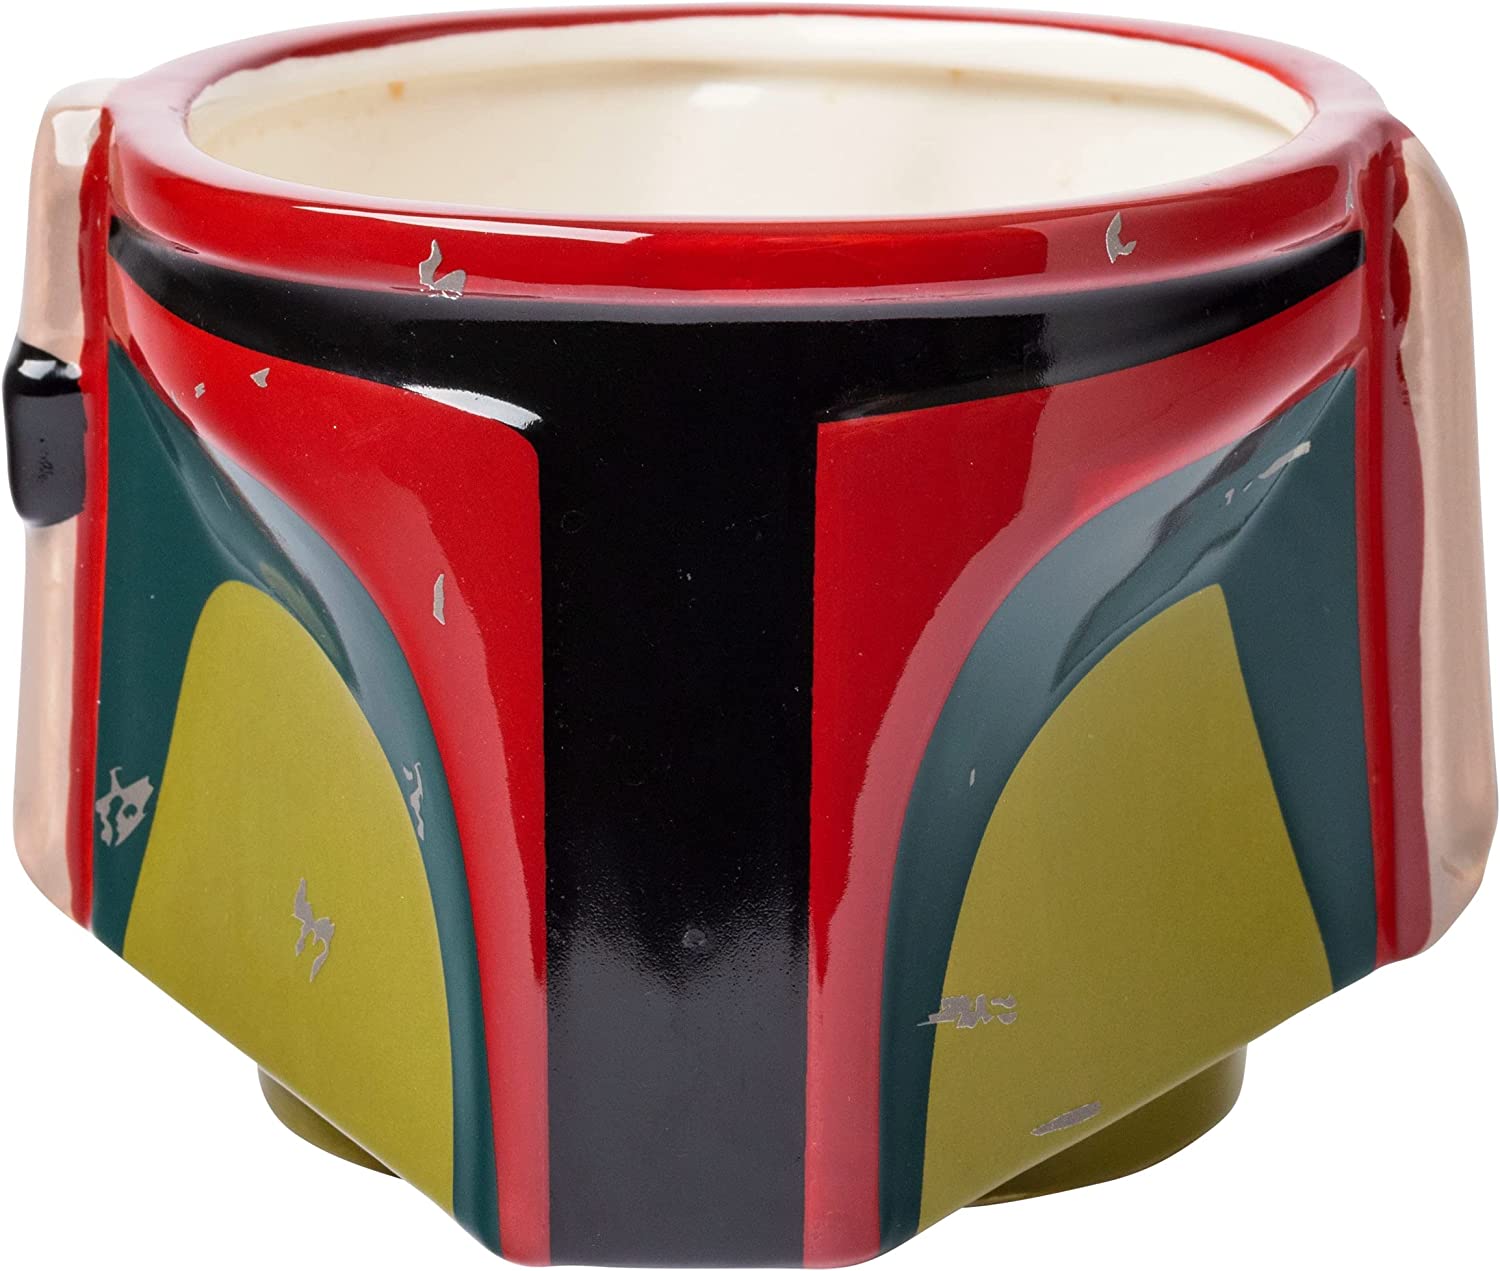 20-Oz Star Wars Boba Fett 3D Sculpted Ceramic Helmet Mug w/ Battle Scars $6.47 + Free Shipping w/ Prime or on $25+